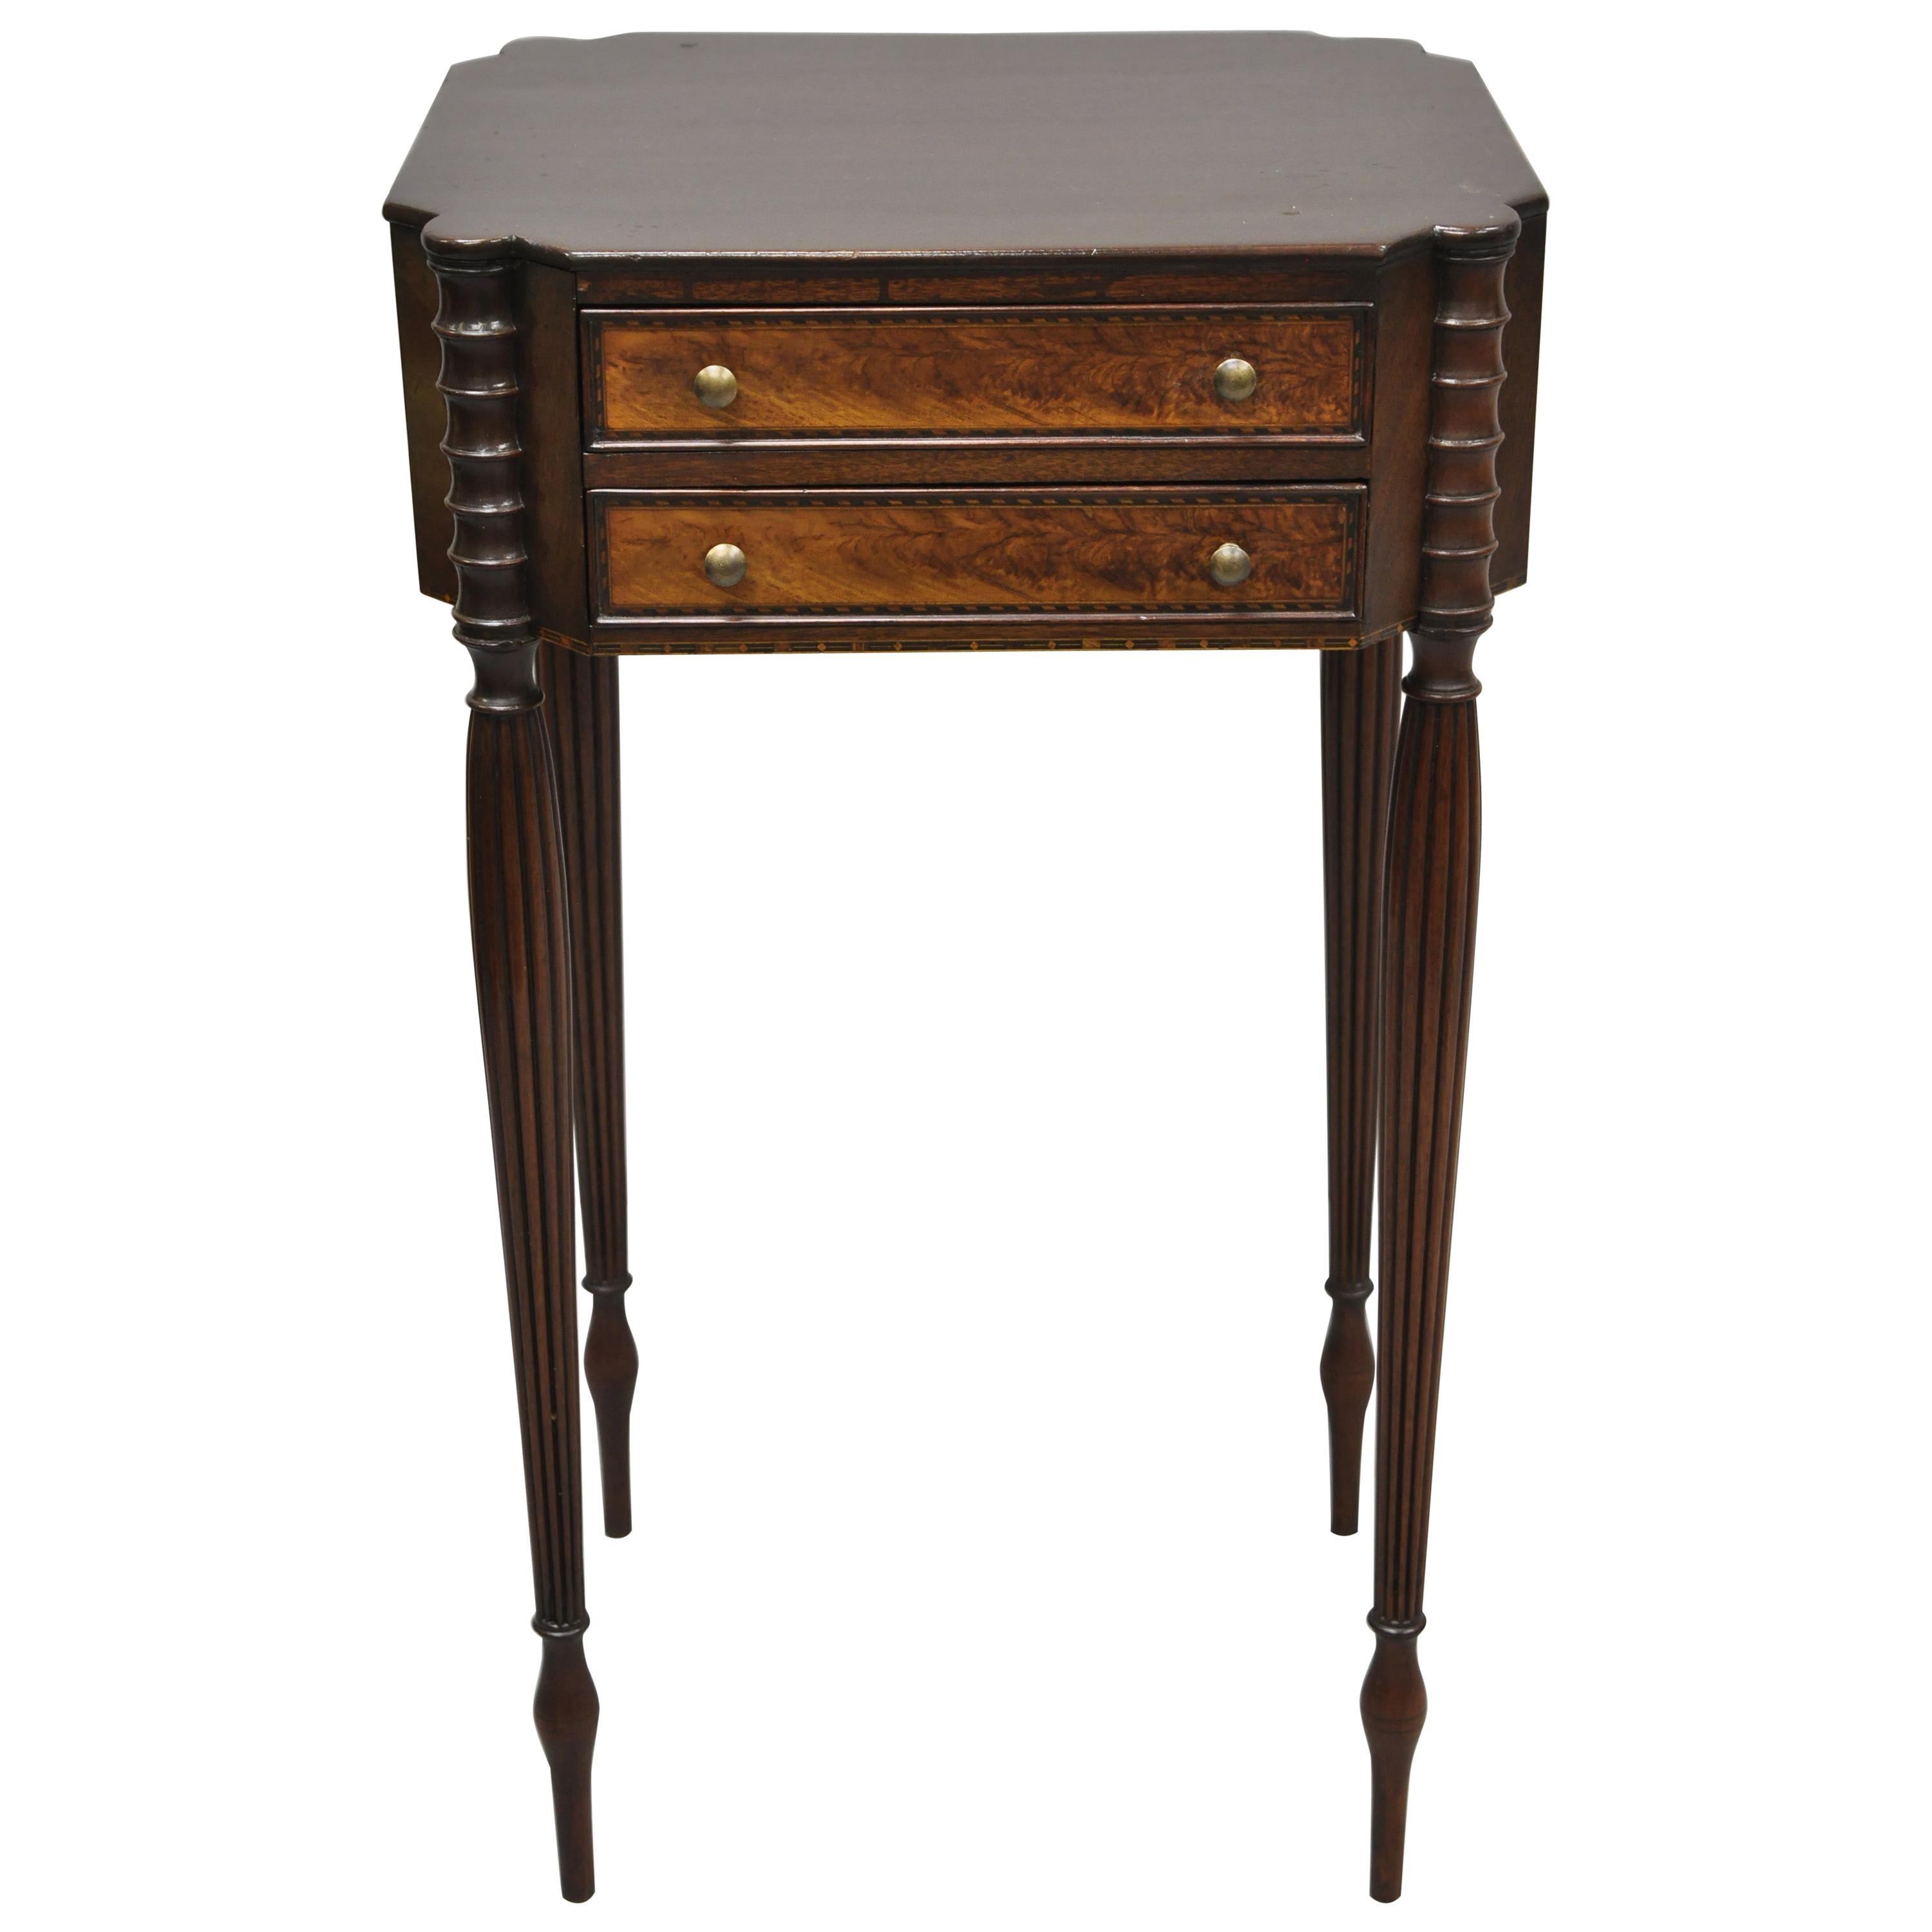 Antique American Sheraton Tall Tapered Leg Burl Wood Nightstand Table